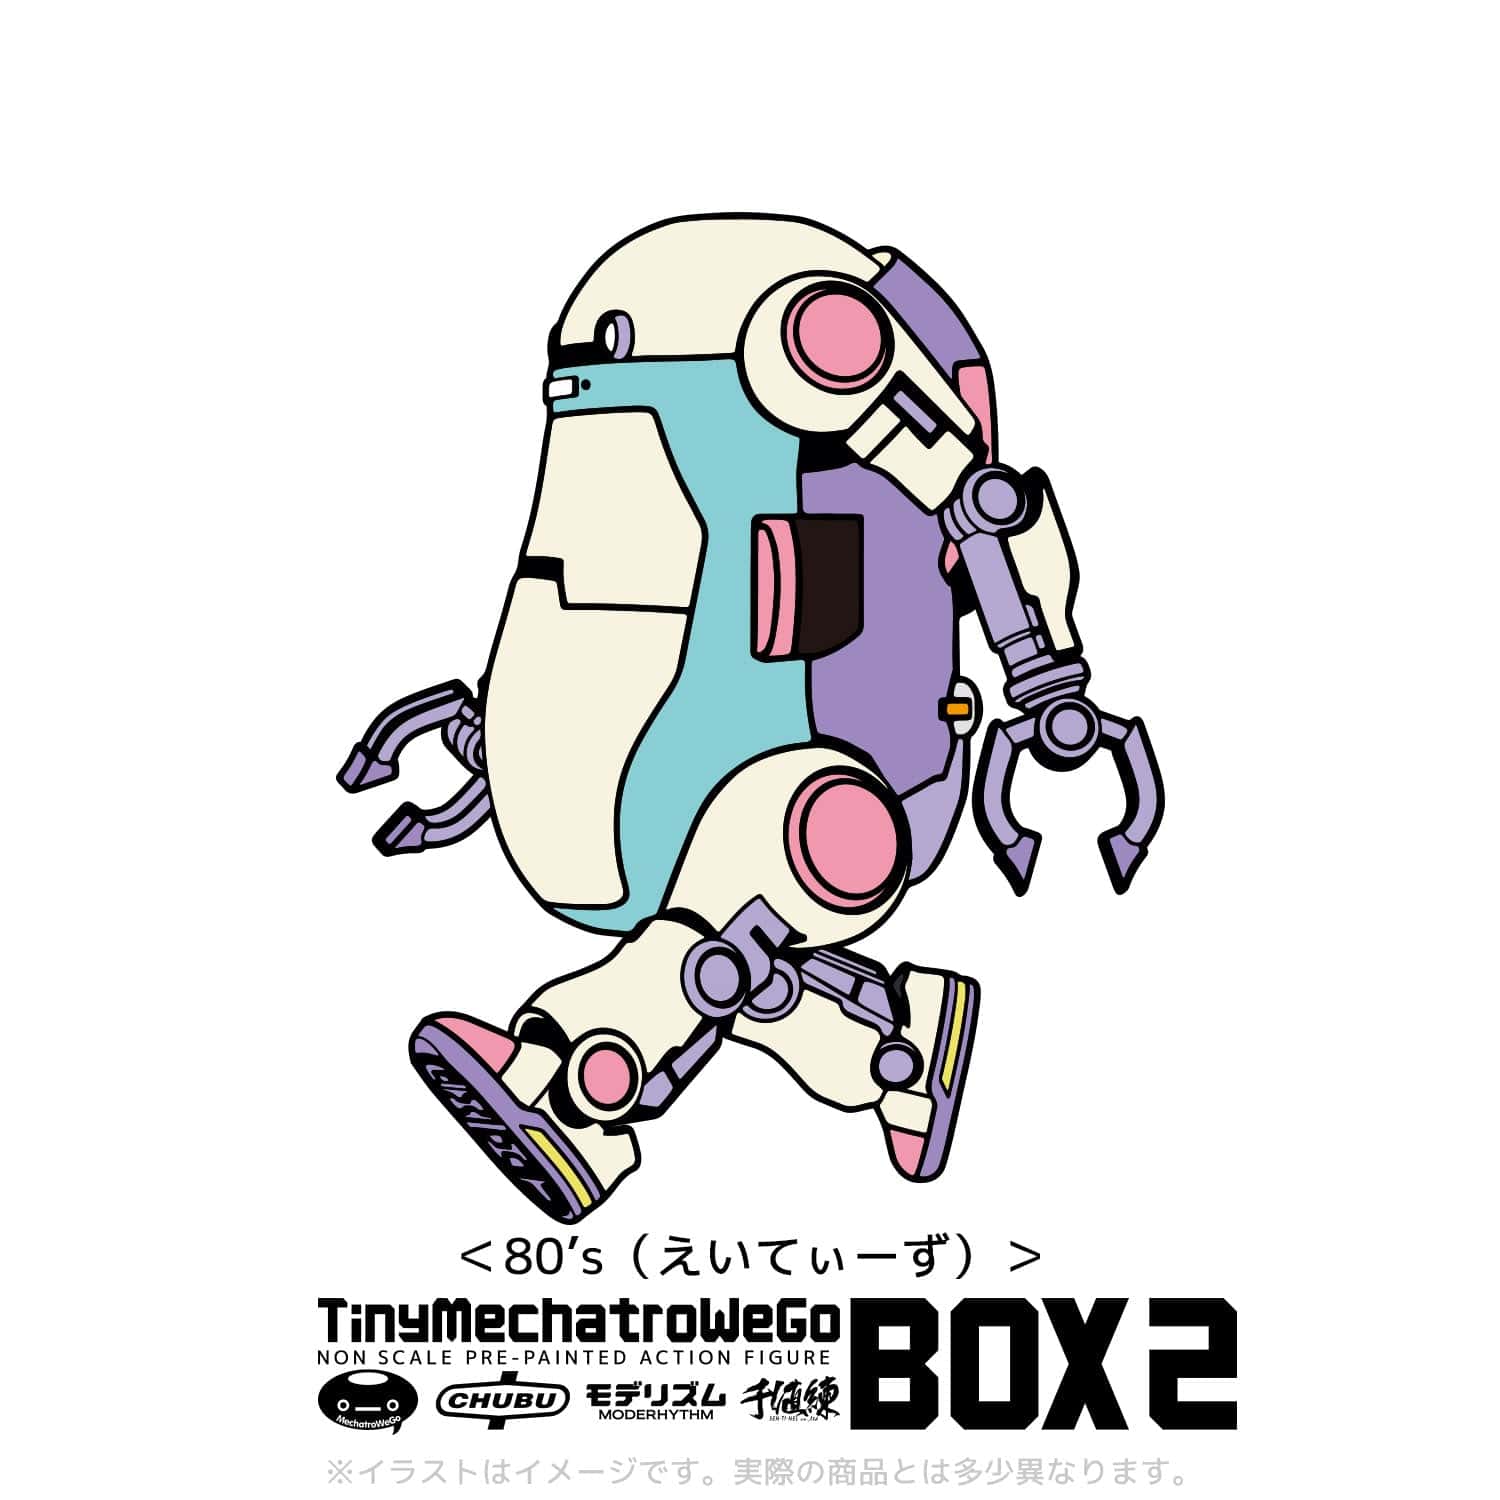 SEN-TI-NEL Tiny MechatroWeGo Box2